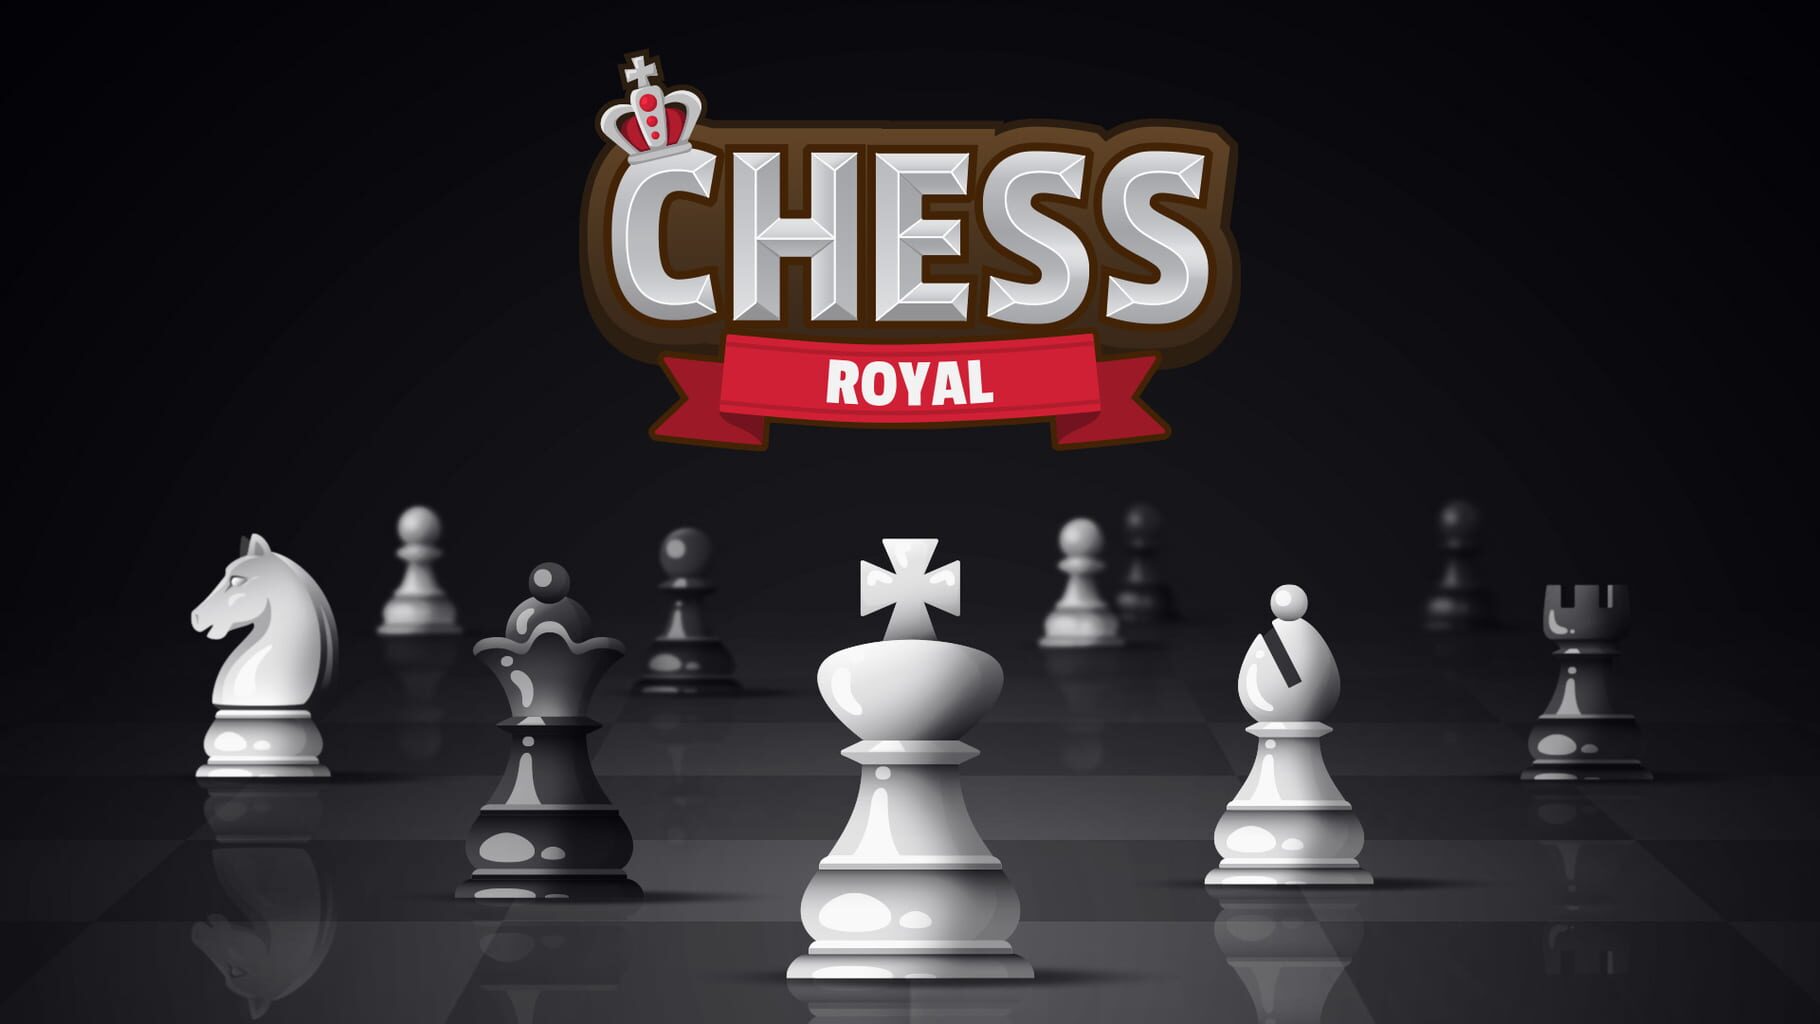 Chess Royal artwork